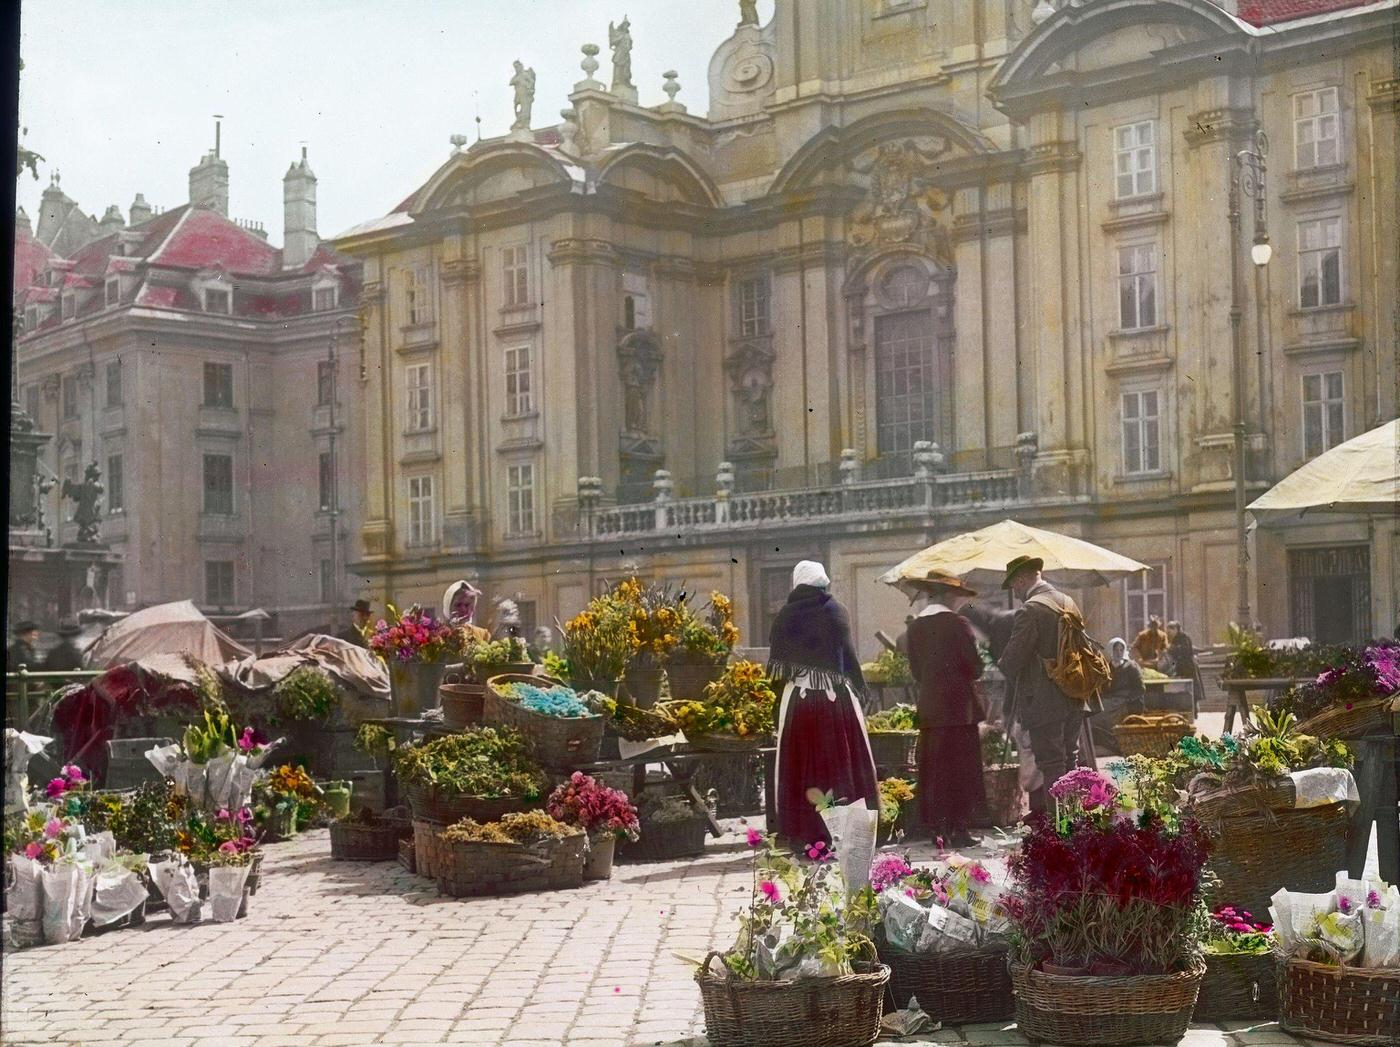 Flower market at Am Hof square in Vienna's 1st district, 1905.